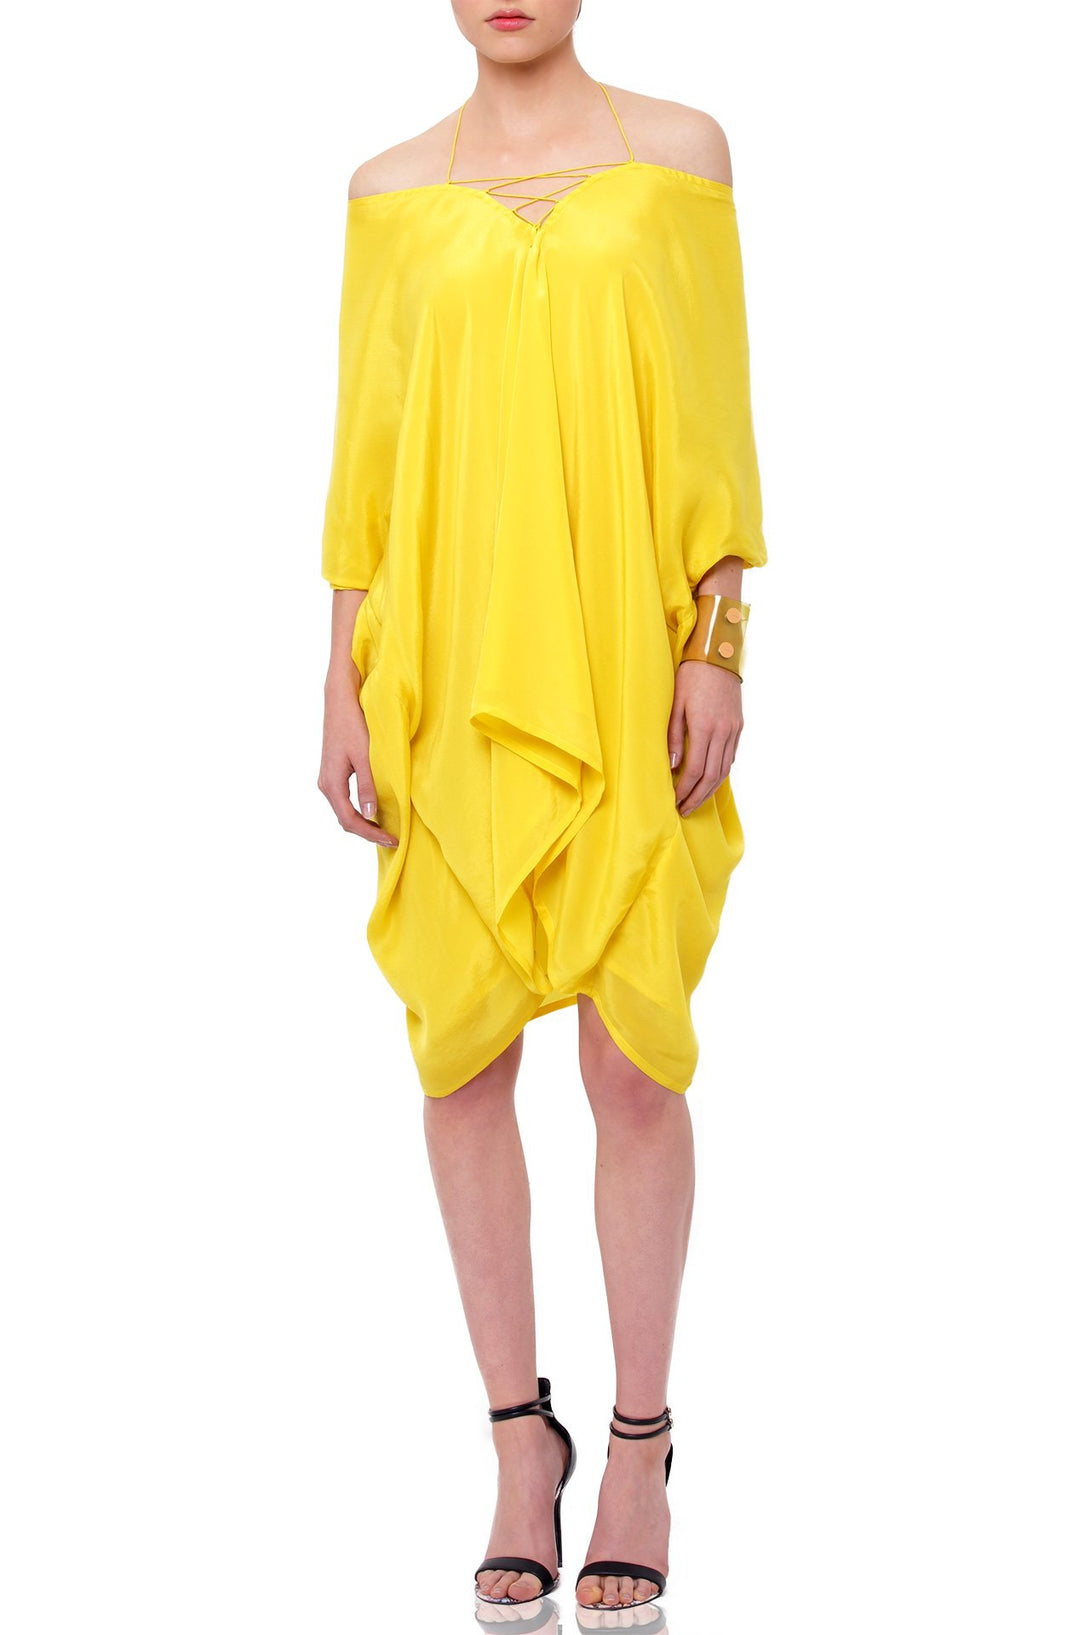  short yellow dress, Shahida Parides, silk caftans,short sleeveless summer dresses, cute mini dresses,